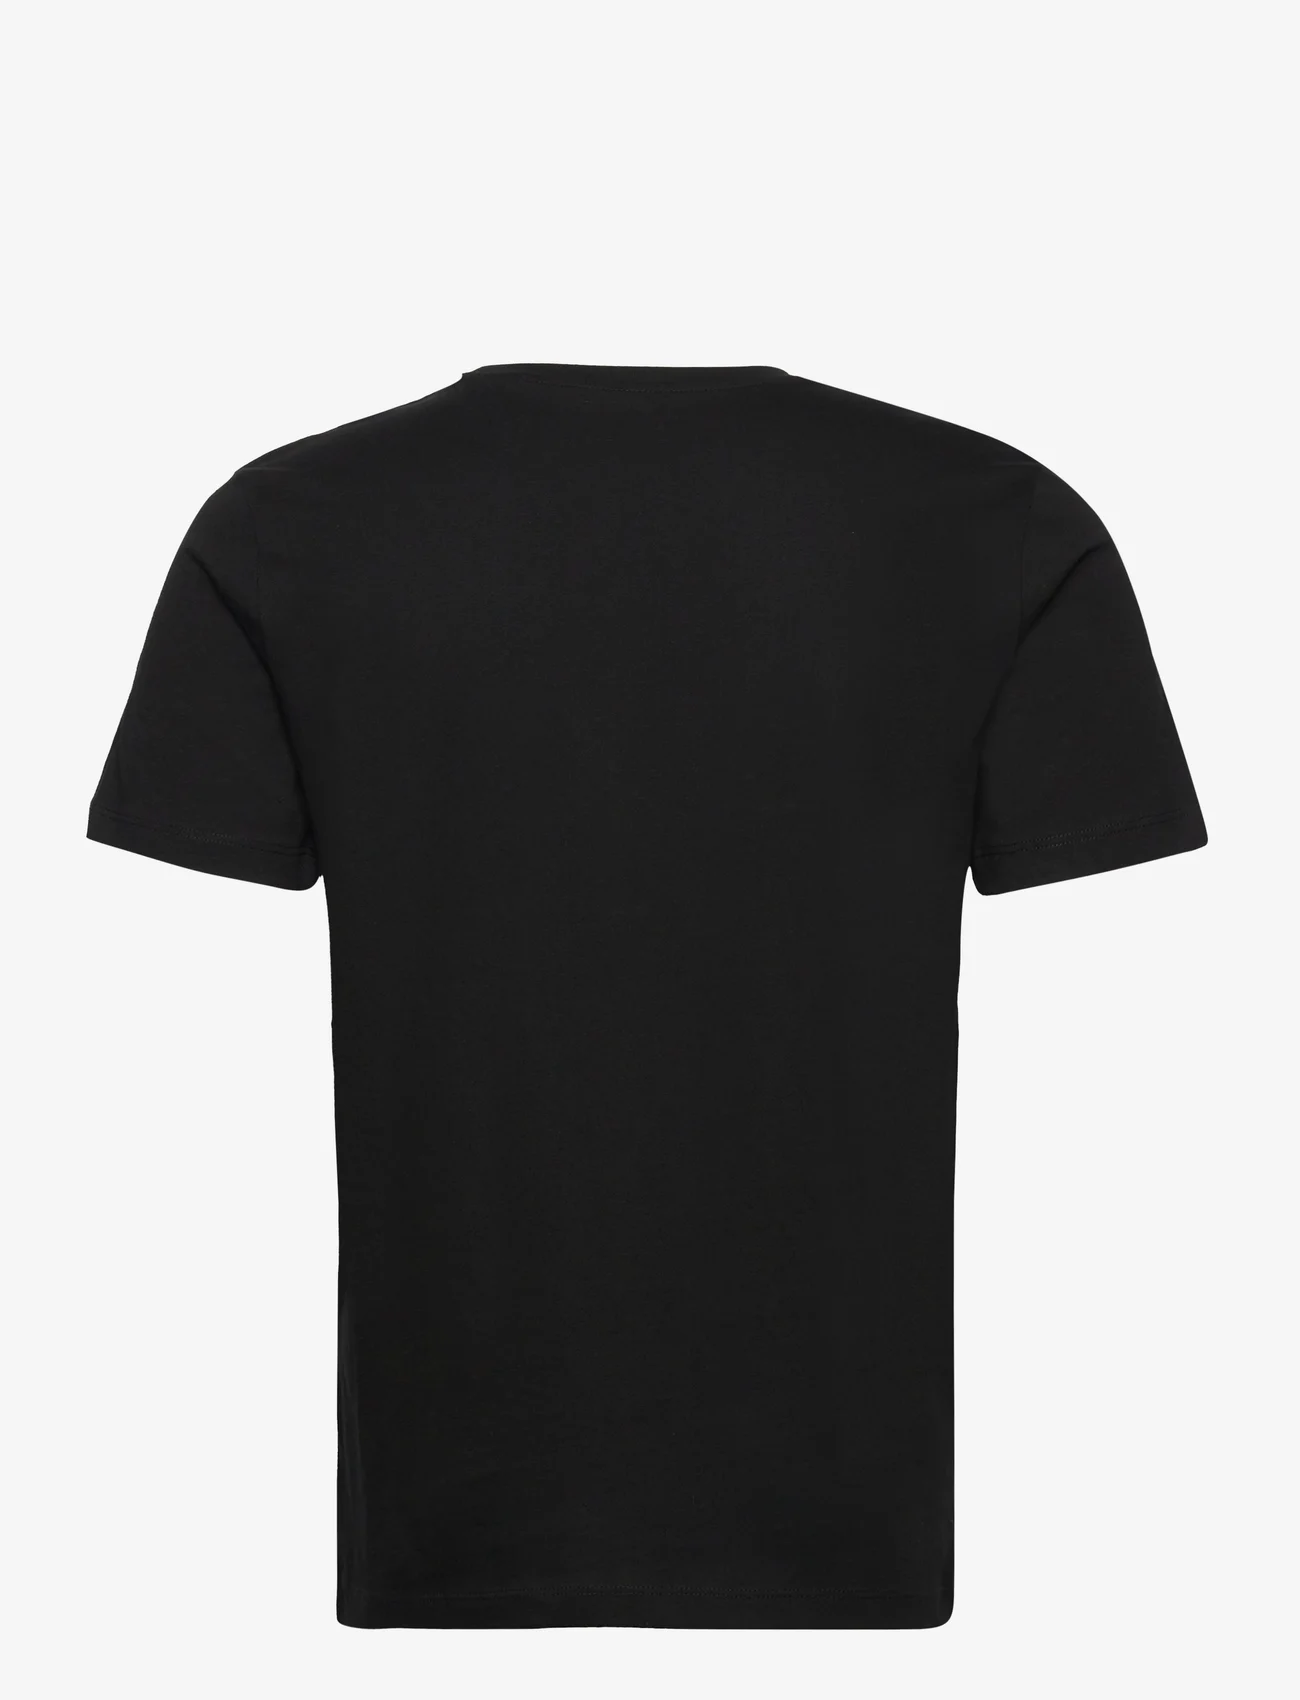 Tom Tailor - photoprinted t-shirt - zemākās cenas - black - 1